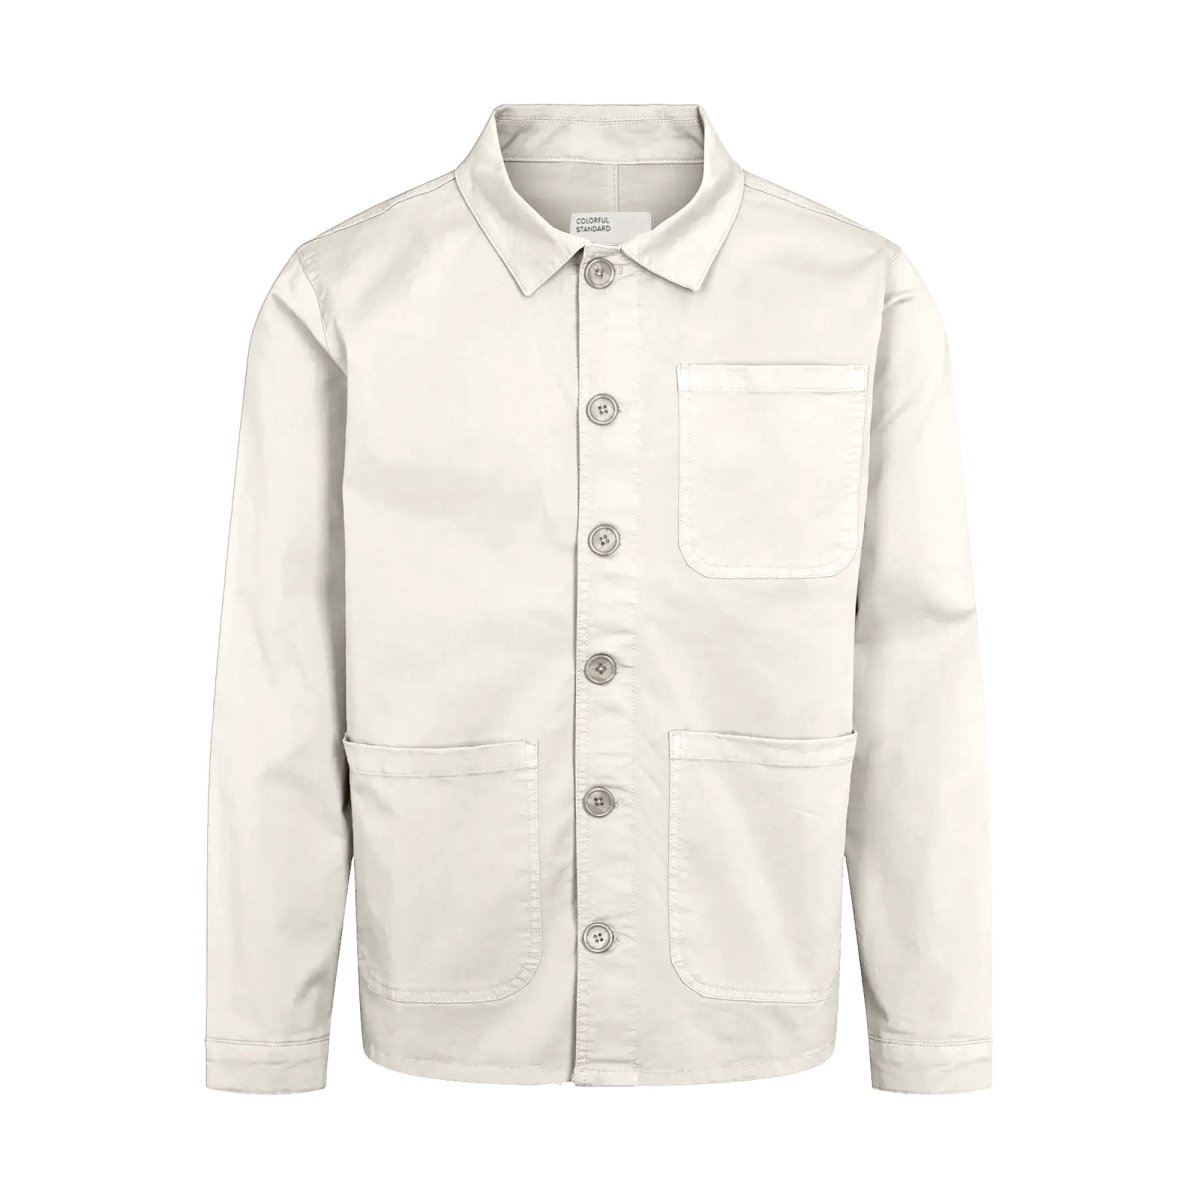 Colorful Workwear Jacket Ivory White - KYOTO - Colorful Standard